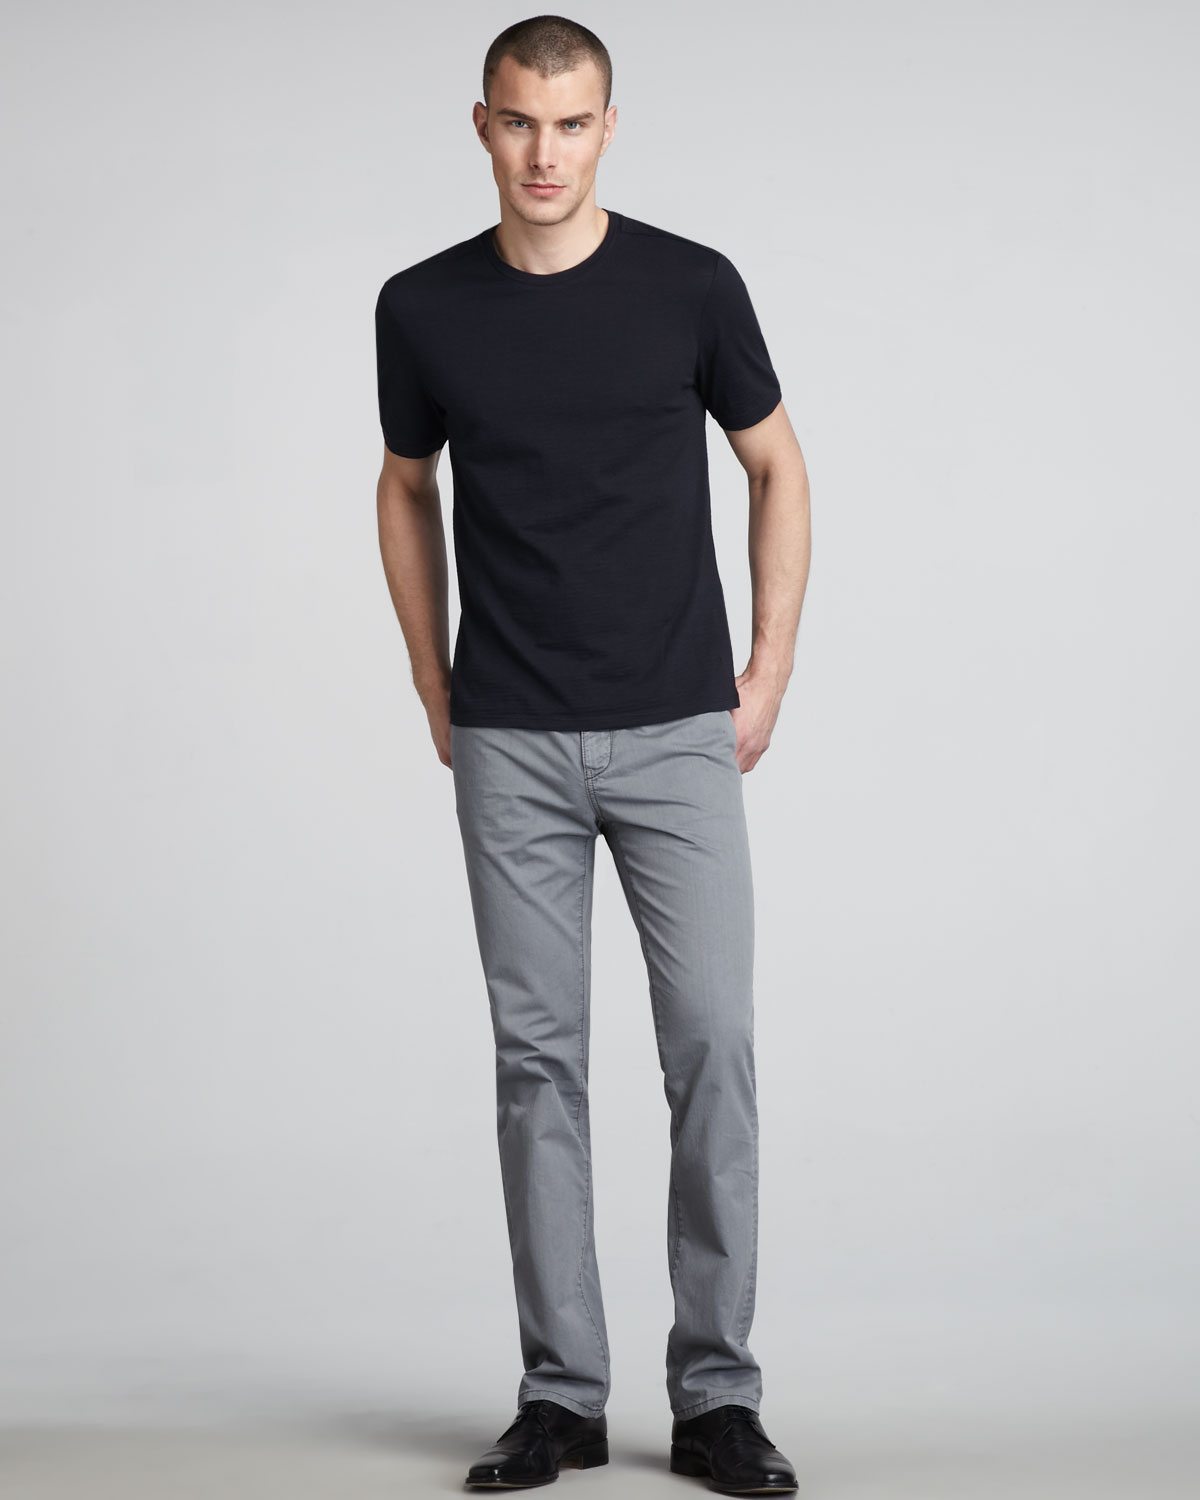 Lyst - Elie Tahari Duncan Slim Pants Gray in Gray for Men